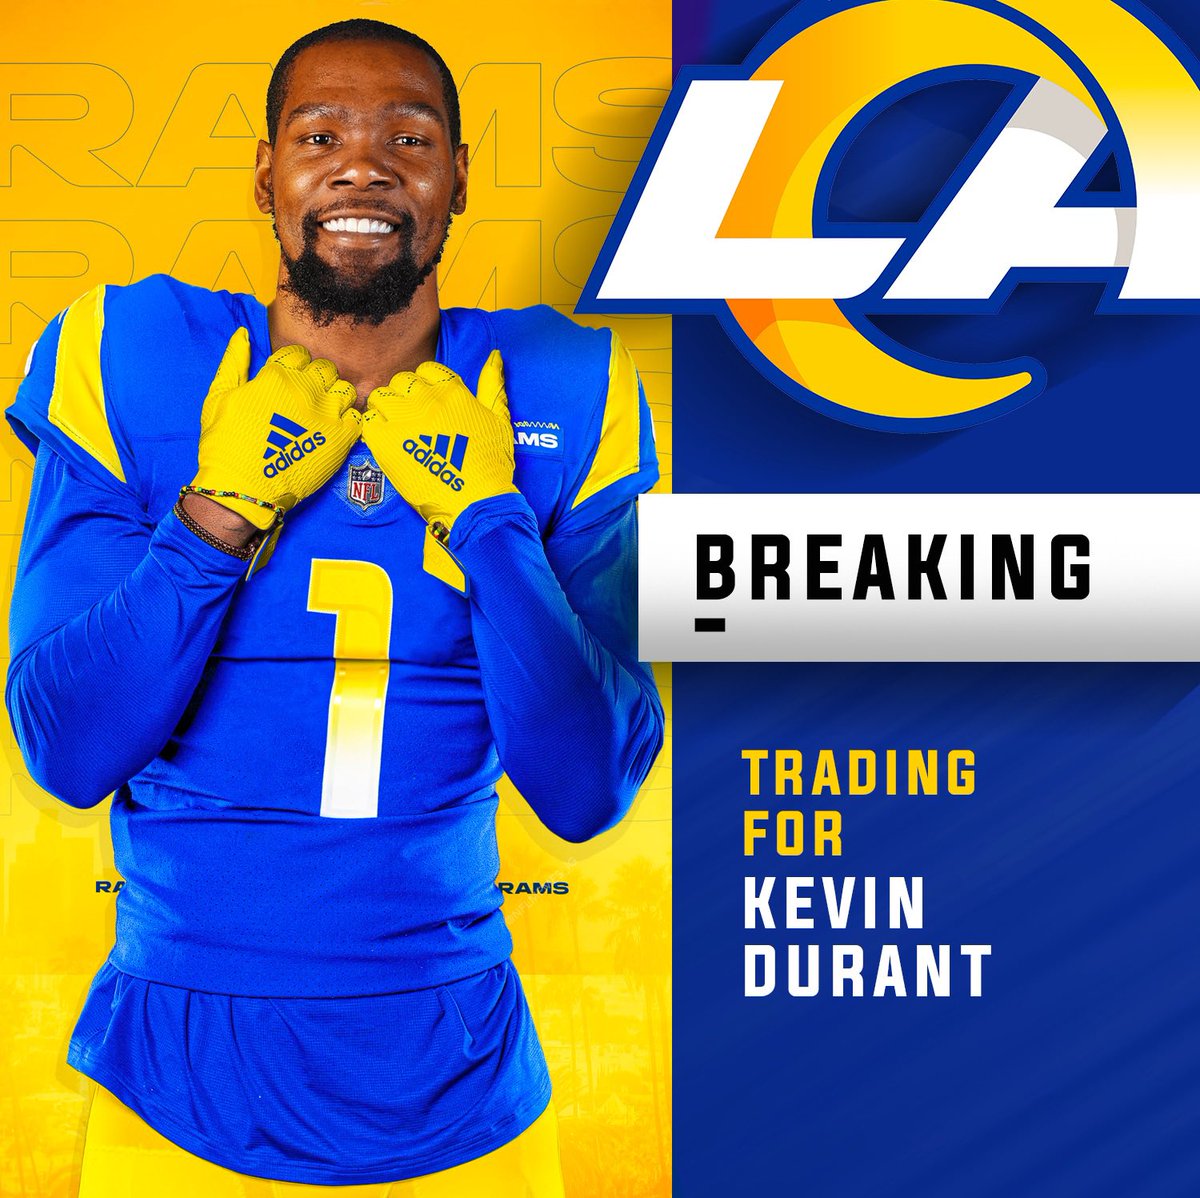 NFL Memes Preseason Roundup - kevin durant rams meme - Ra adidas Dan 19 adidas Ms L Rams Breaking Trading For Kevin Durant